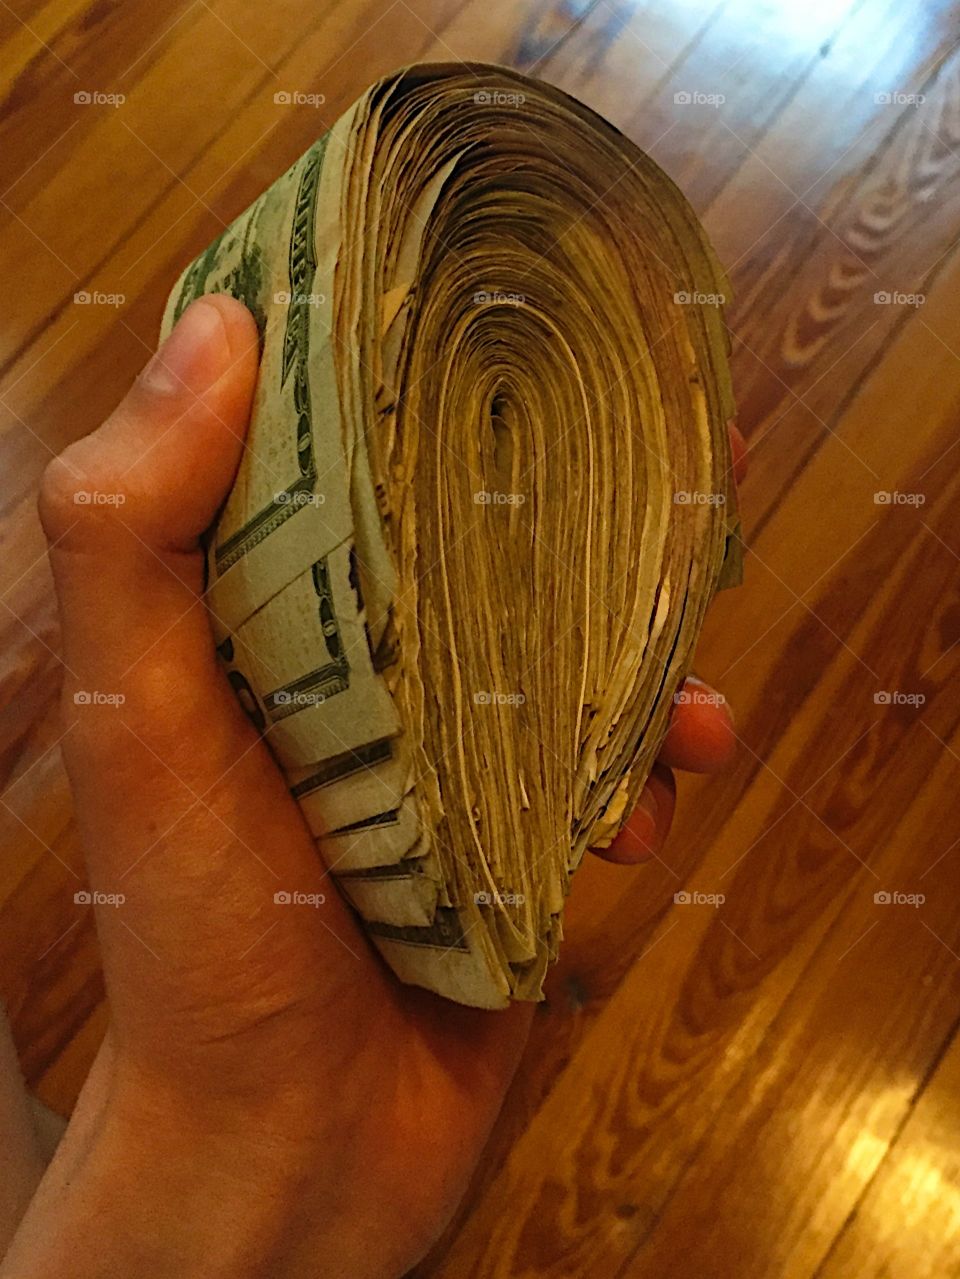 A bunch of cash